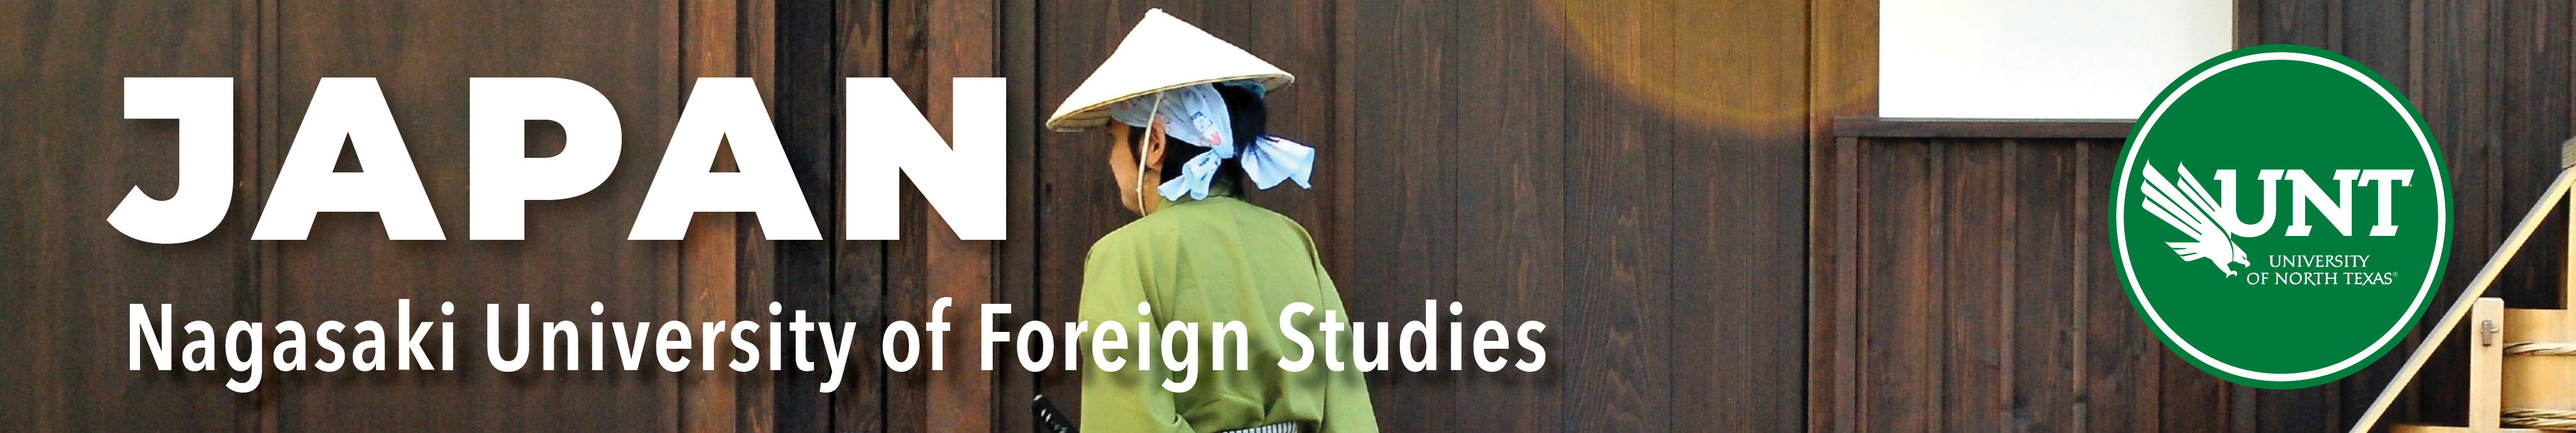 Nagasaki University of Foreign Studies Banner